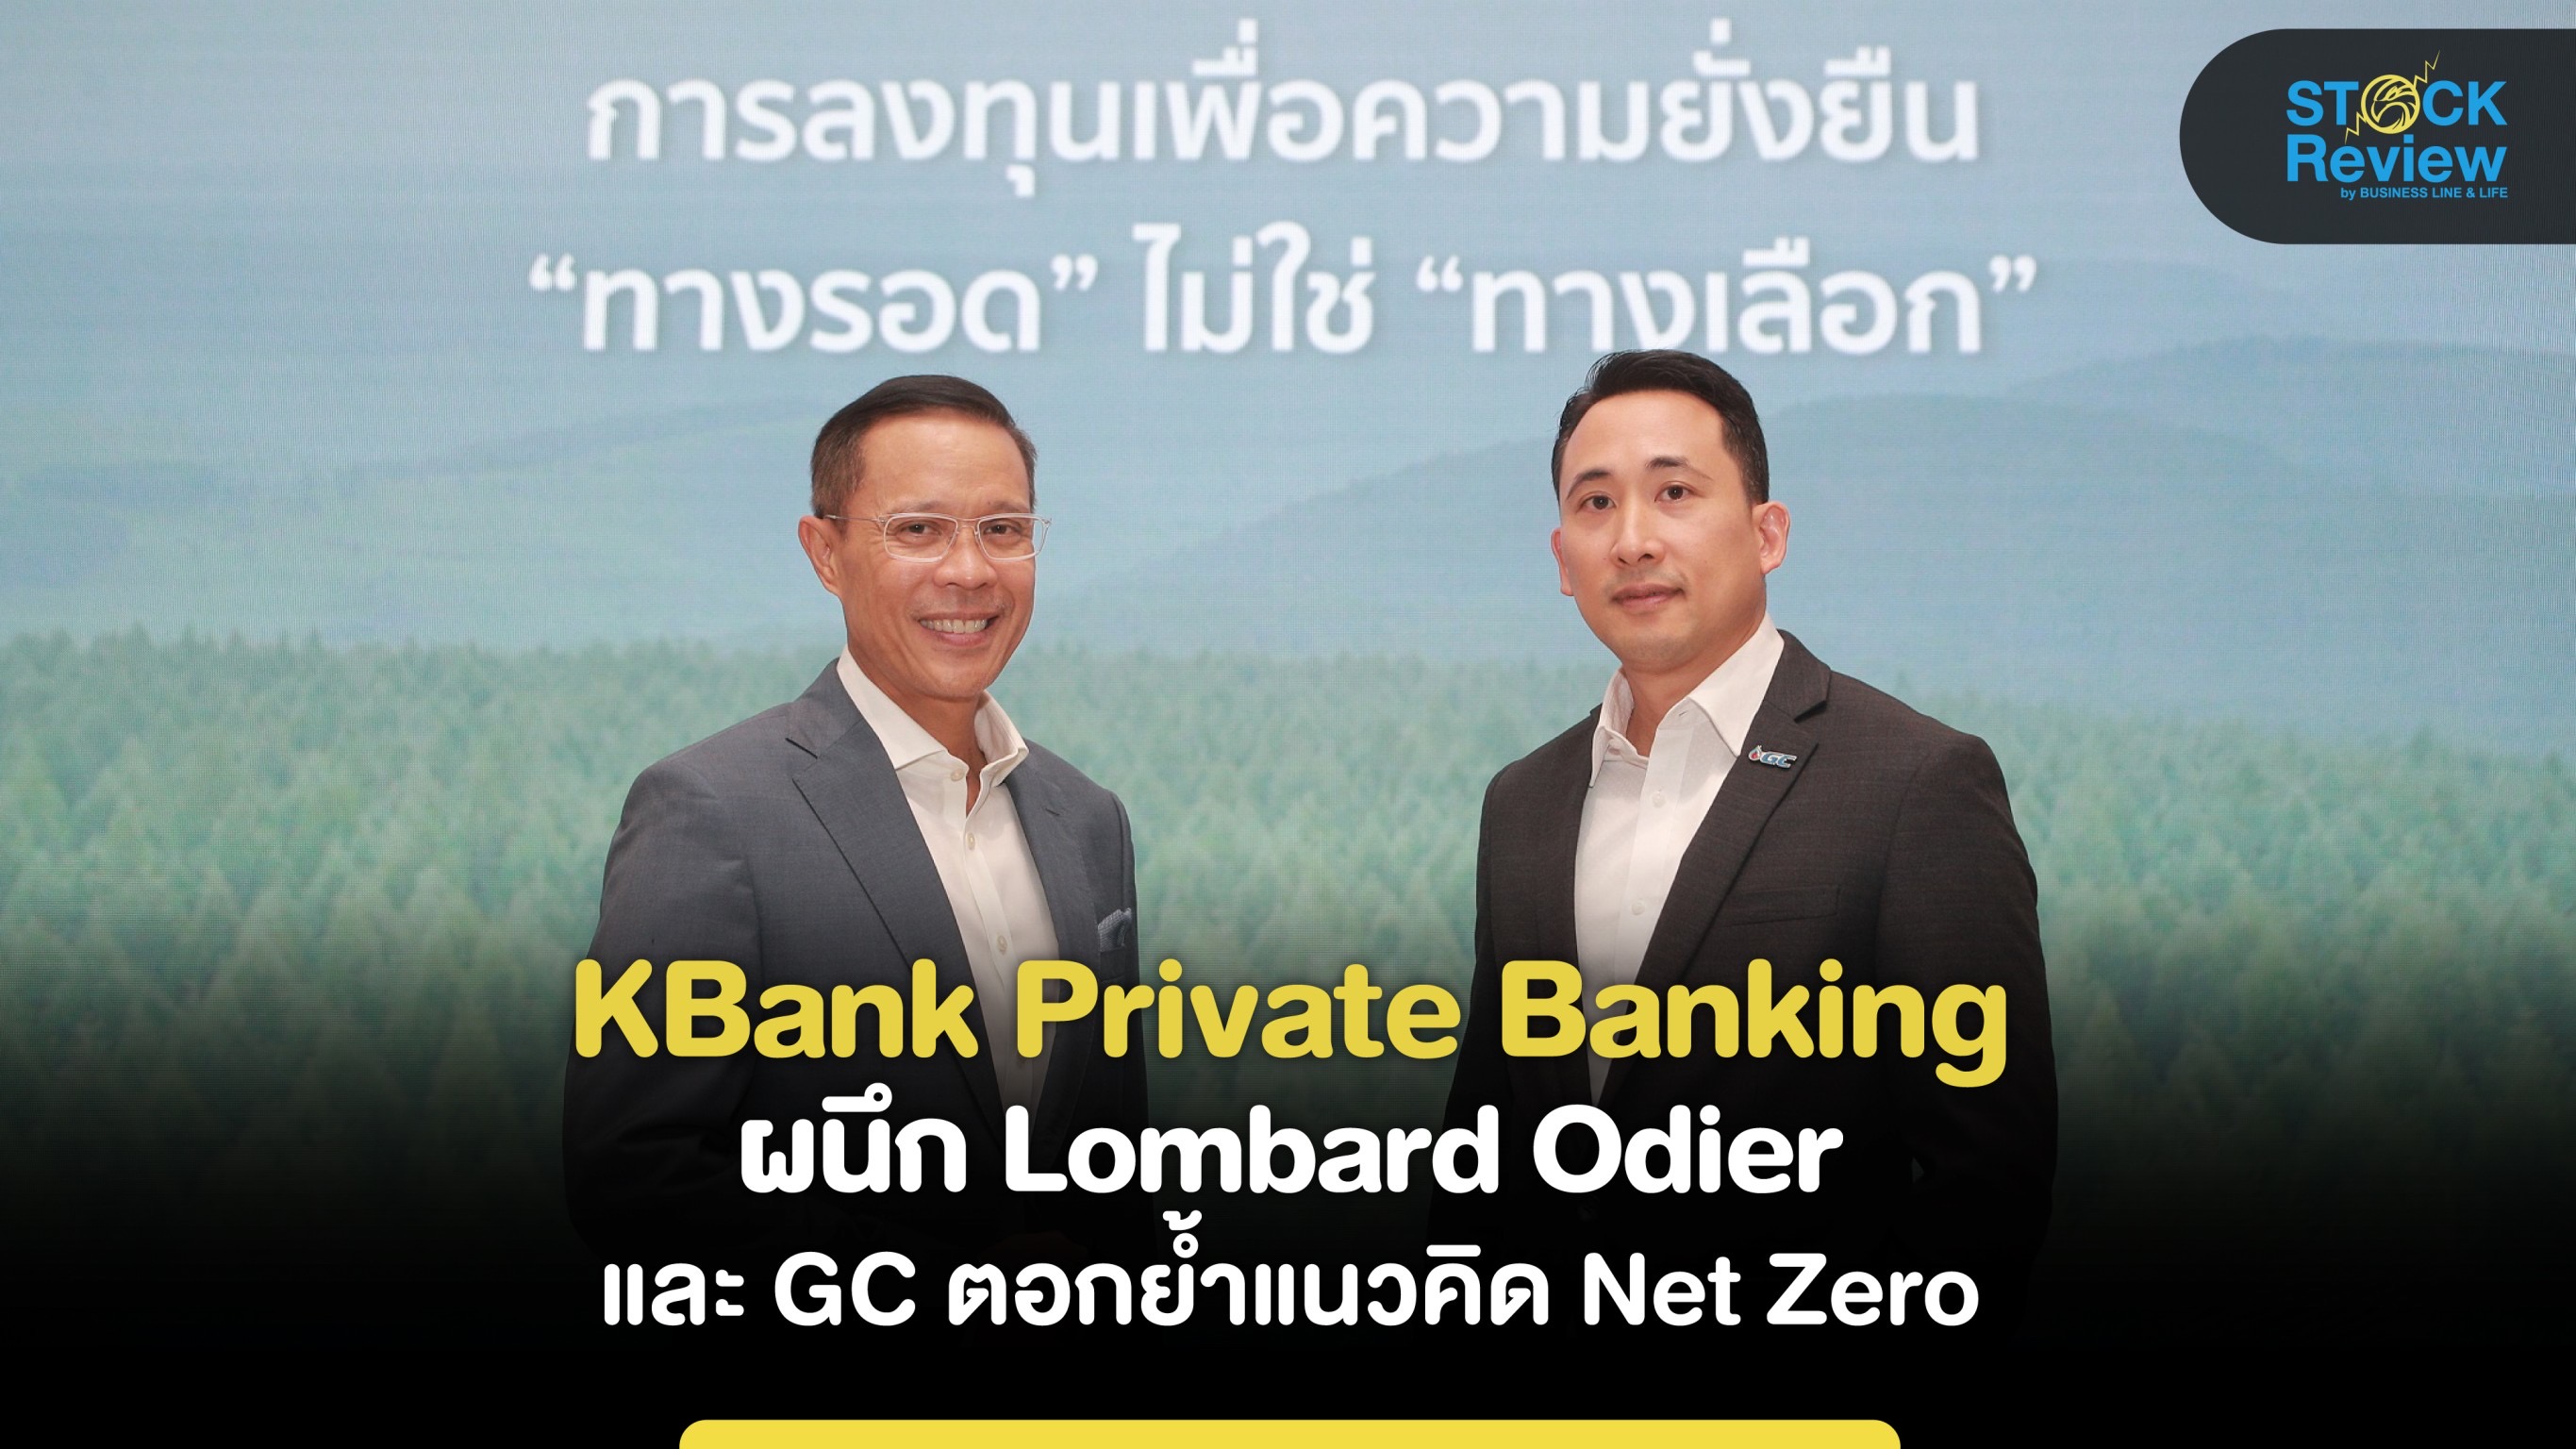 KBank Private Banking ผนึก Lombard Odier และ GC ตอกย้ำแนวคิด Net Zero